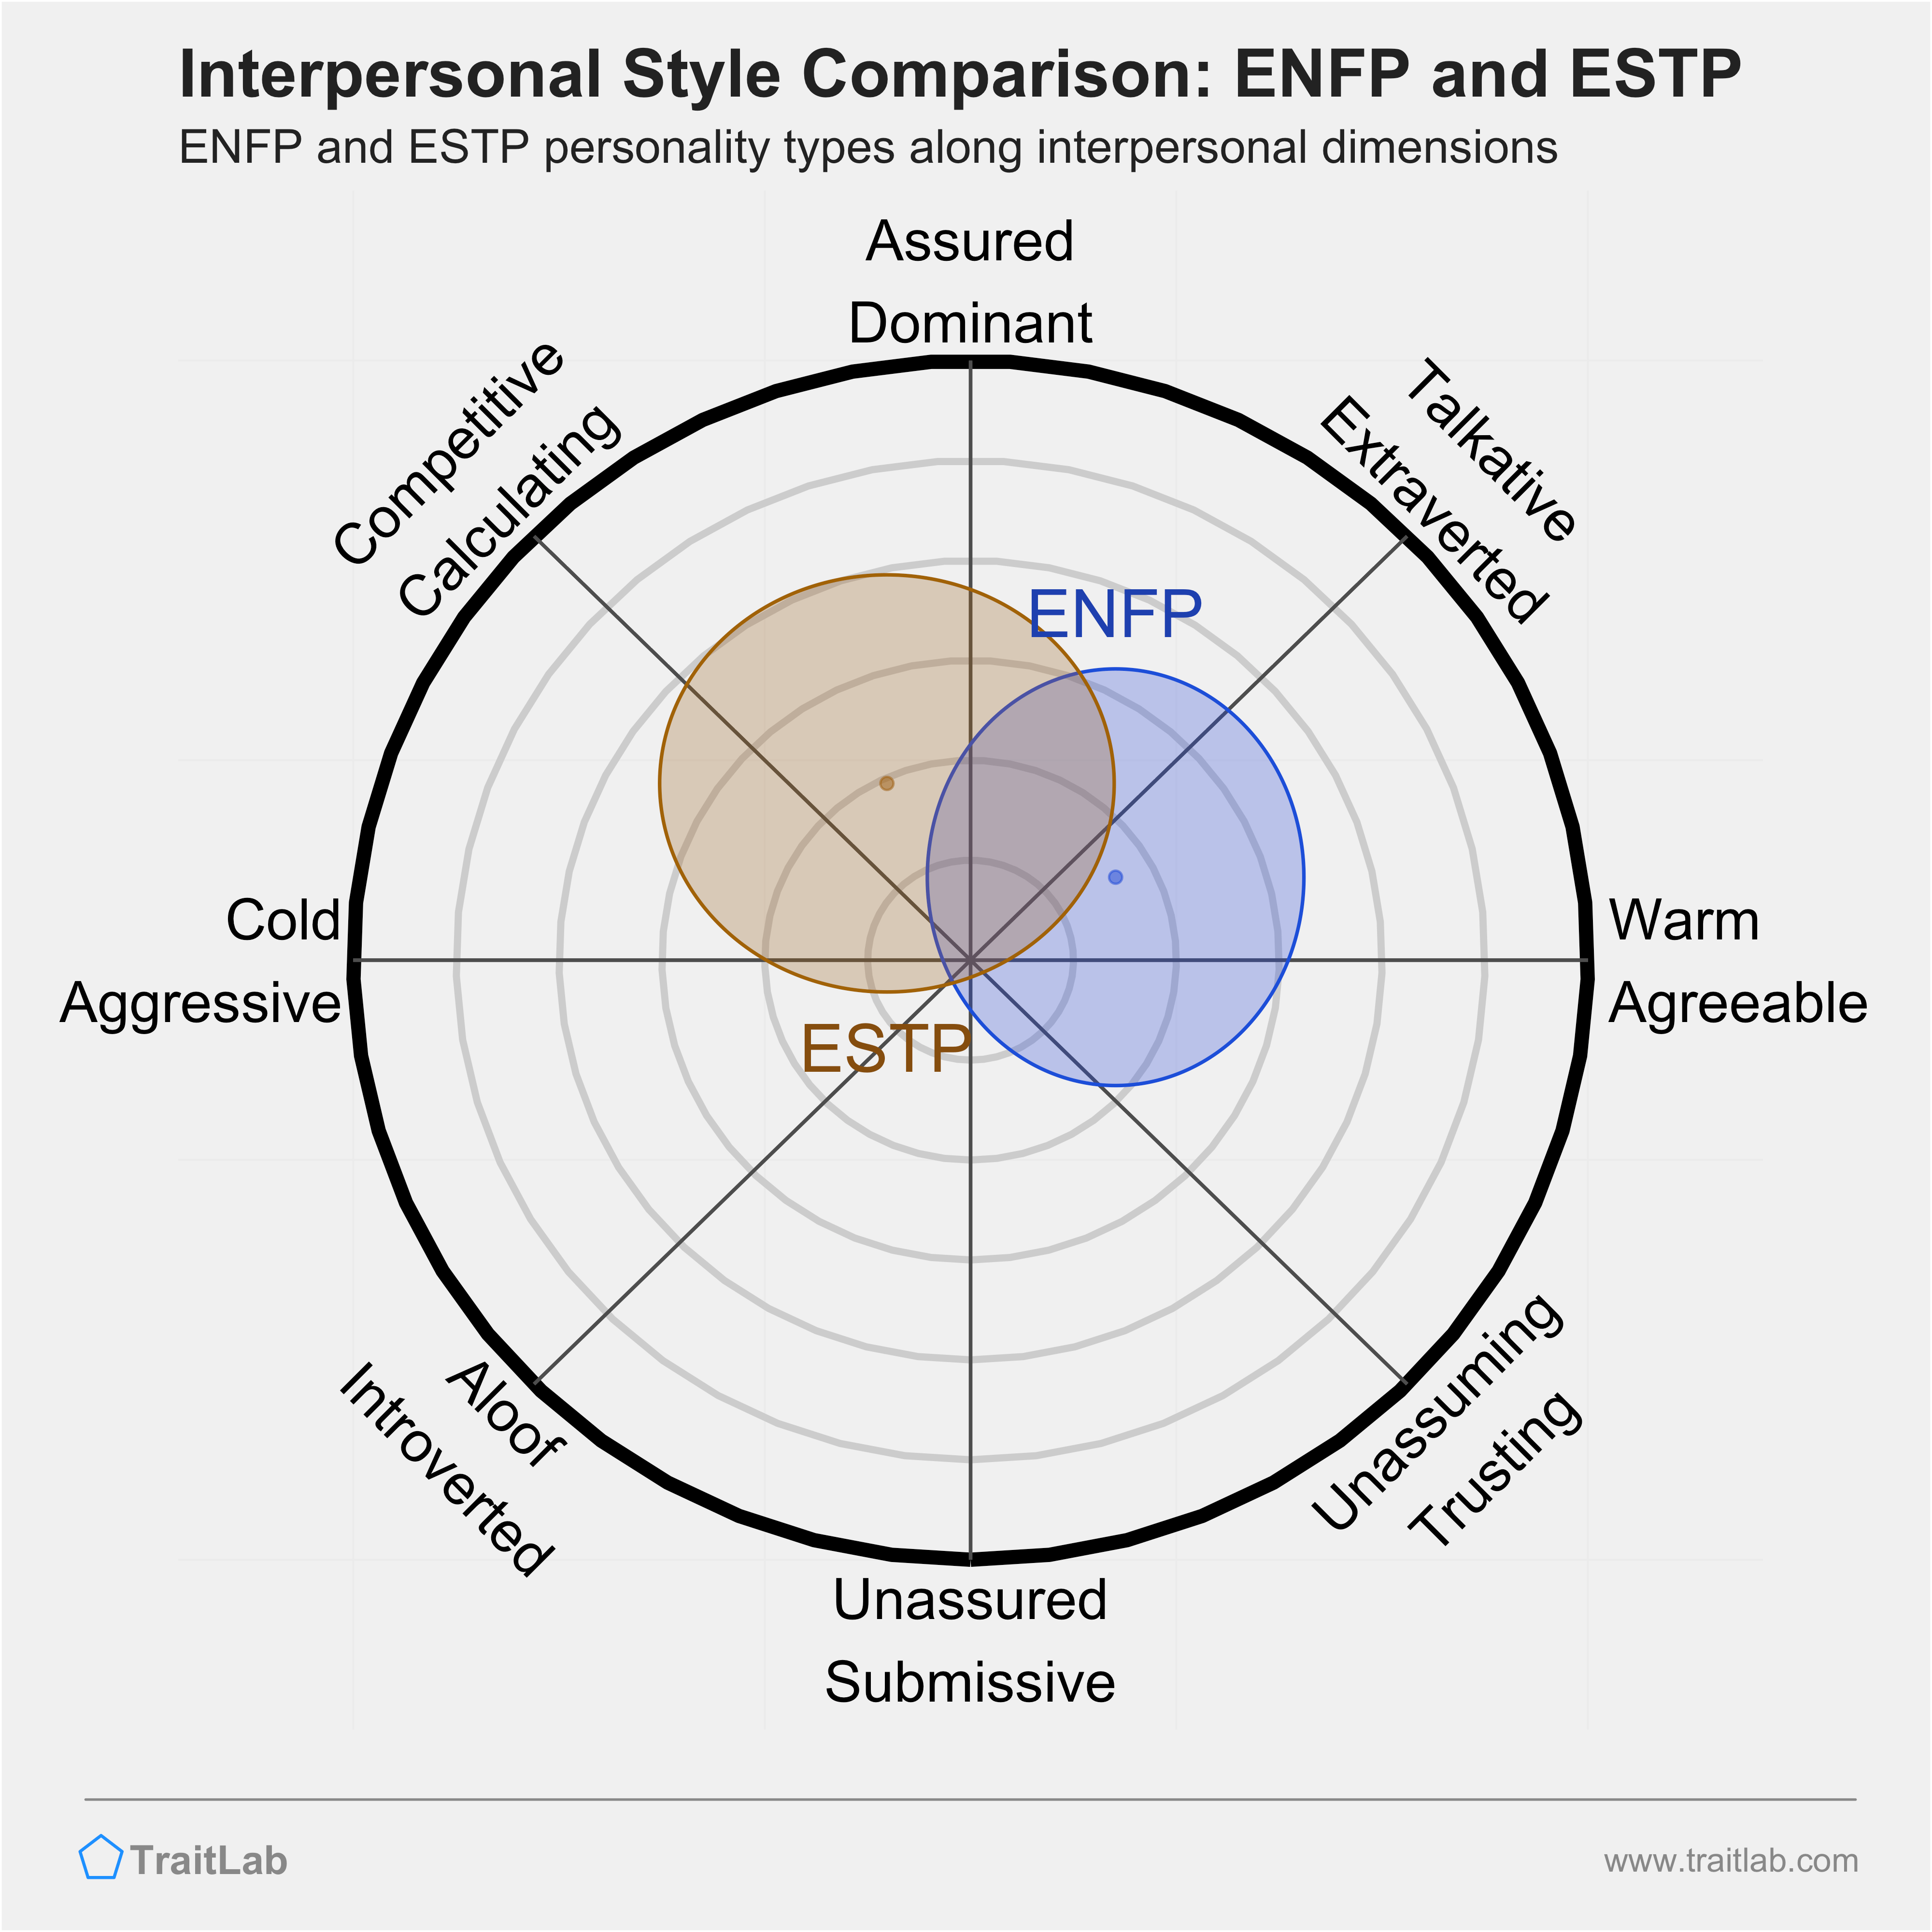 ENFP and ESTP comparison across interpersonal dimensions